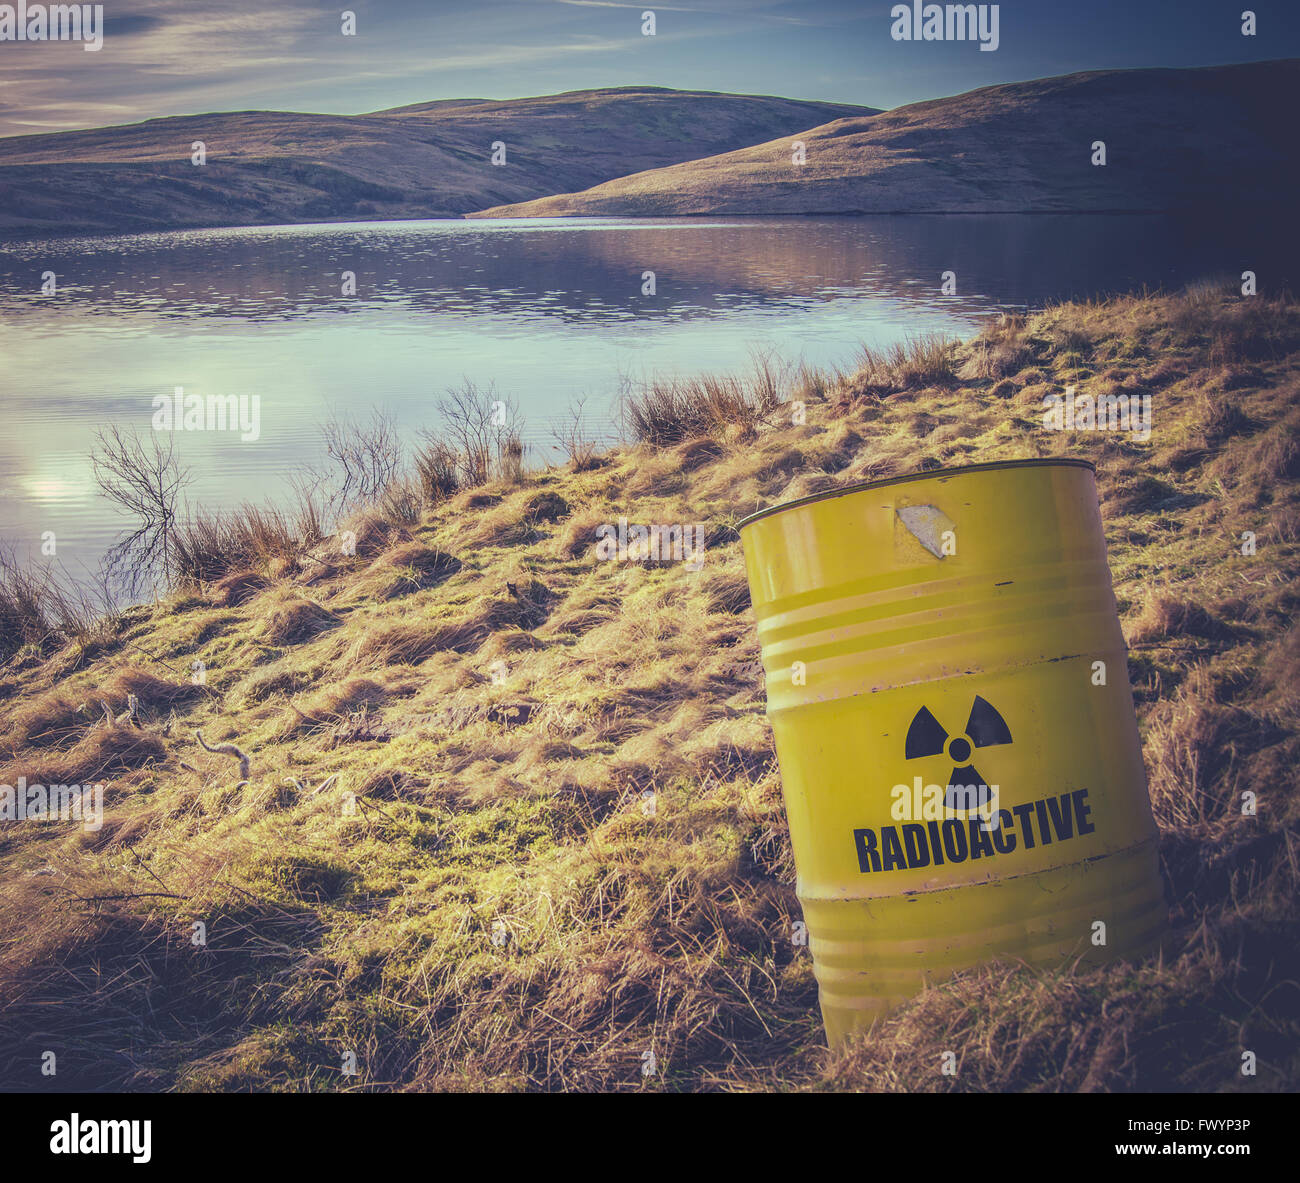 Radioactive Nuclear Waste Barrel Near Water Stock Photo